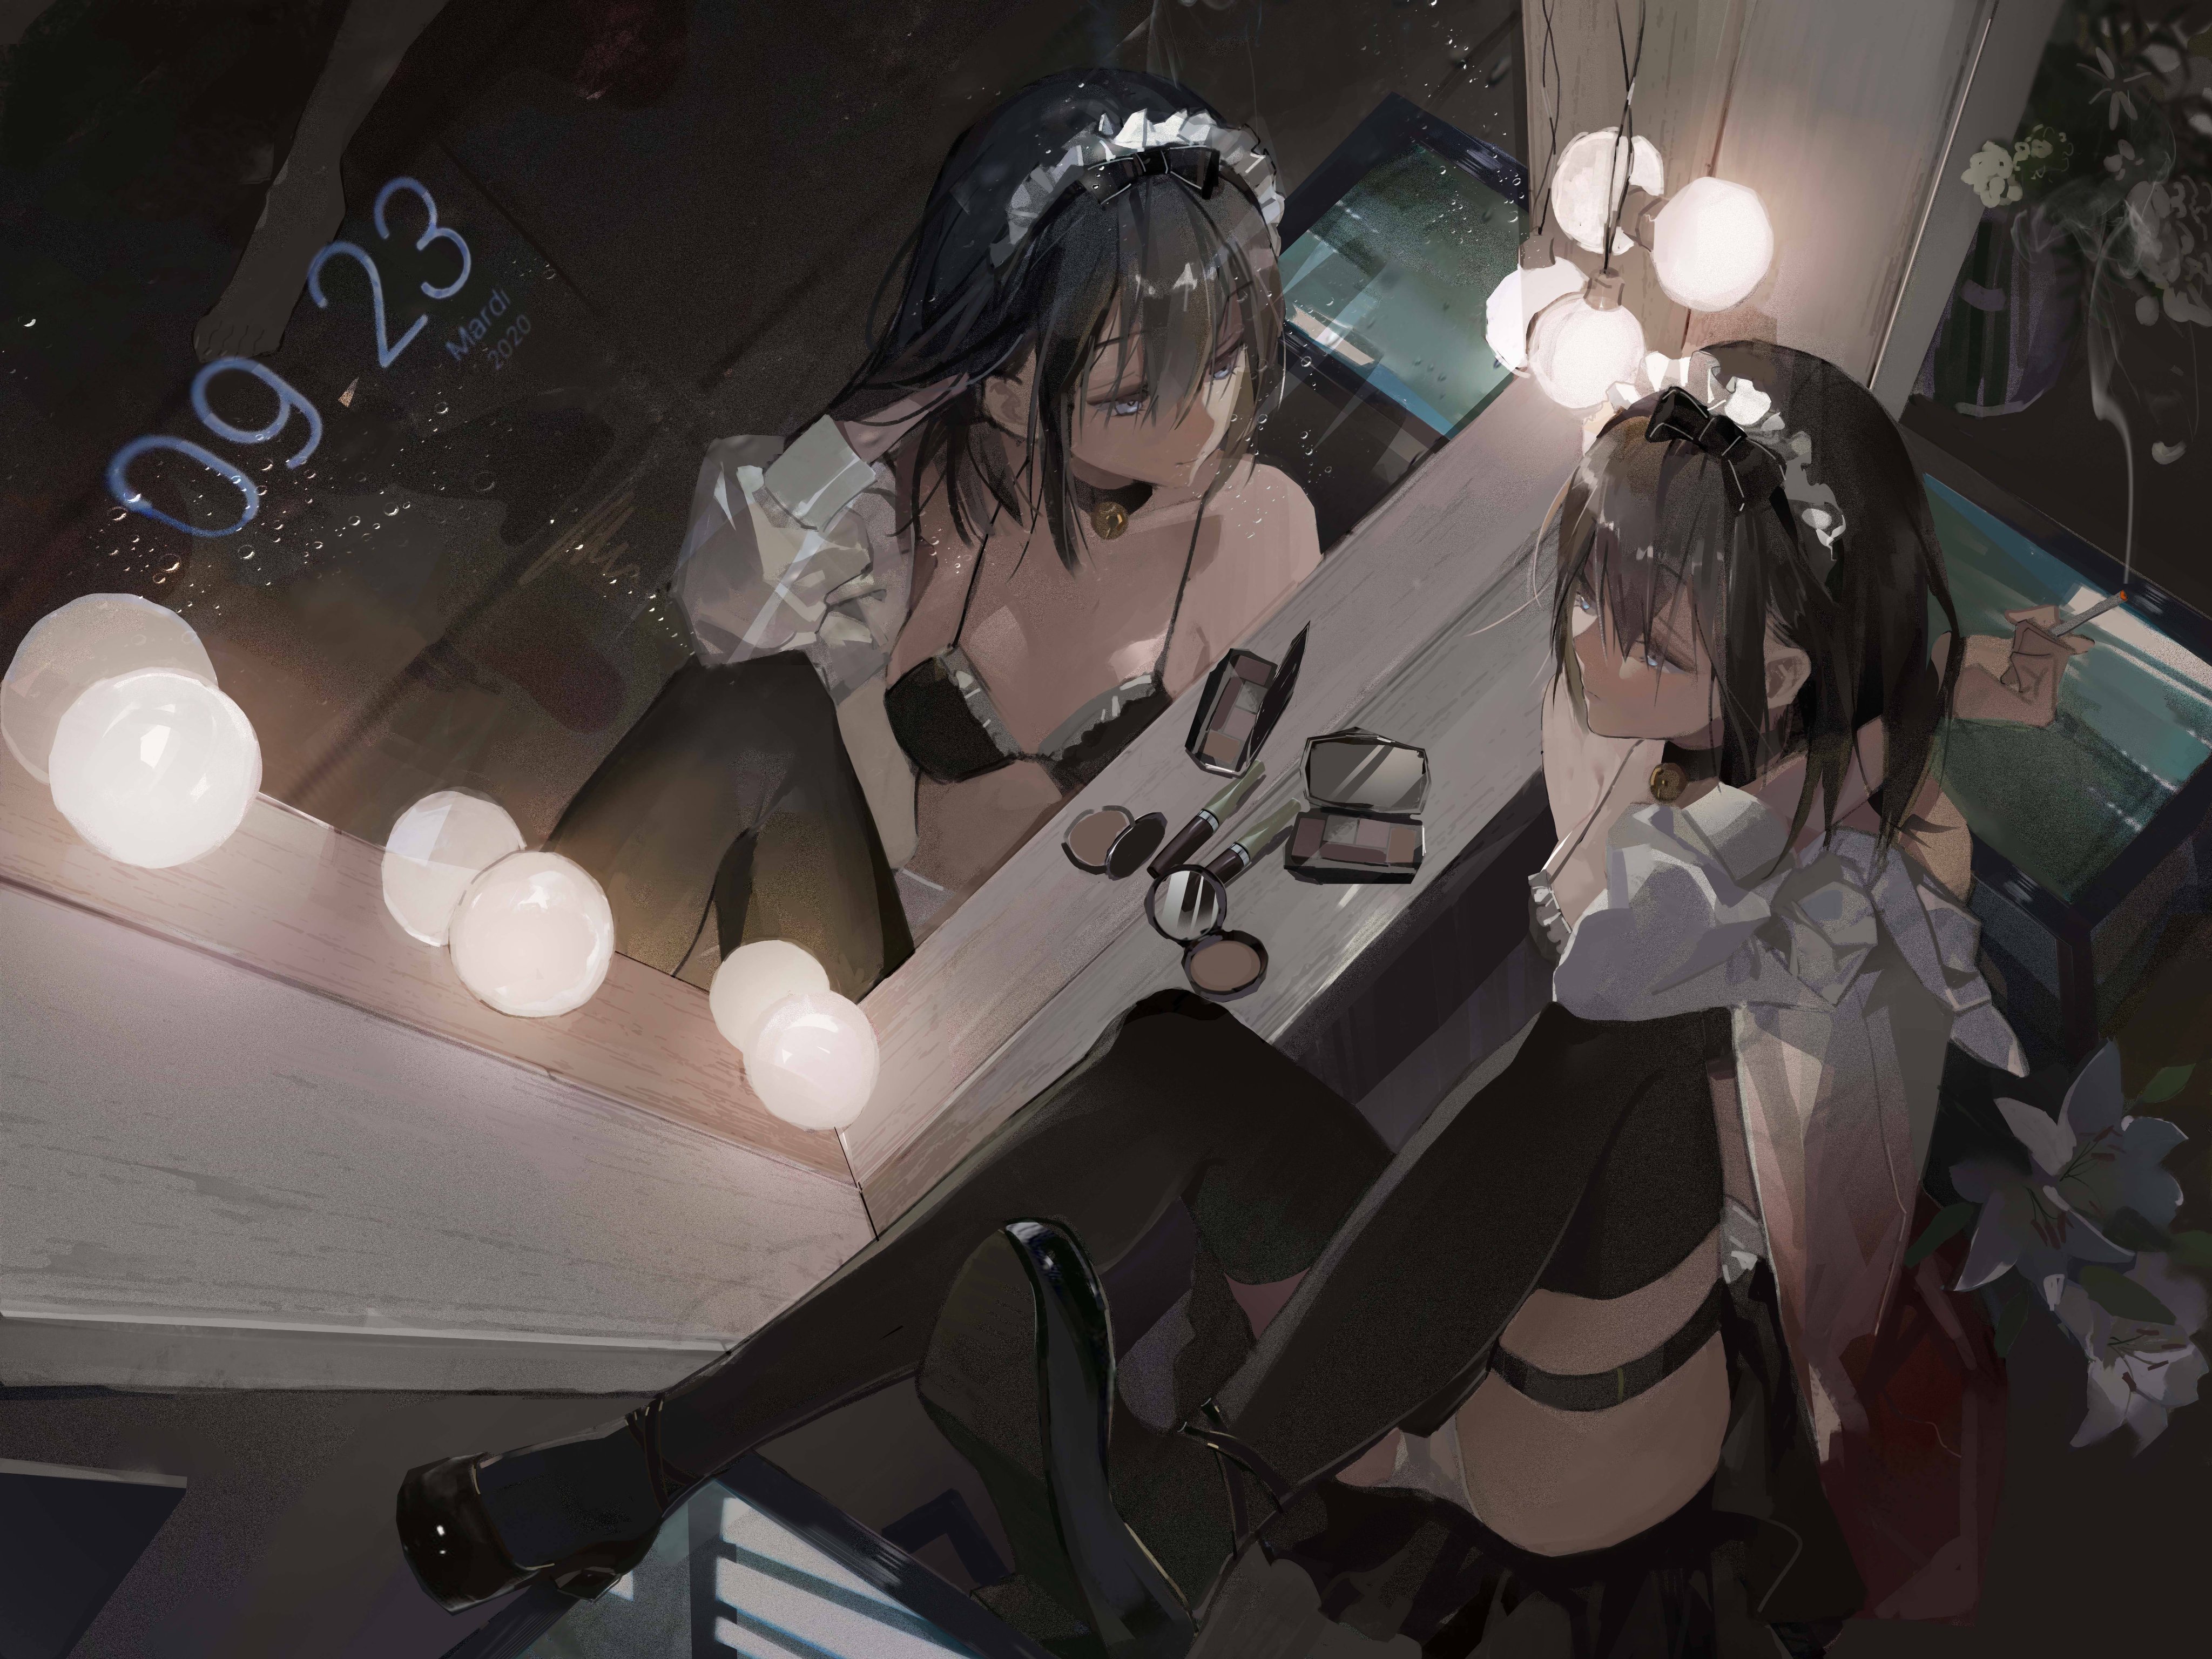 Anime 4096x3072 Songruan artwork anime girls smoking mirror maid outfit maid bikini